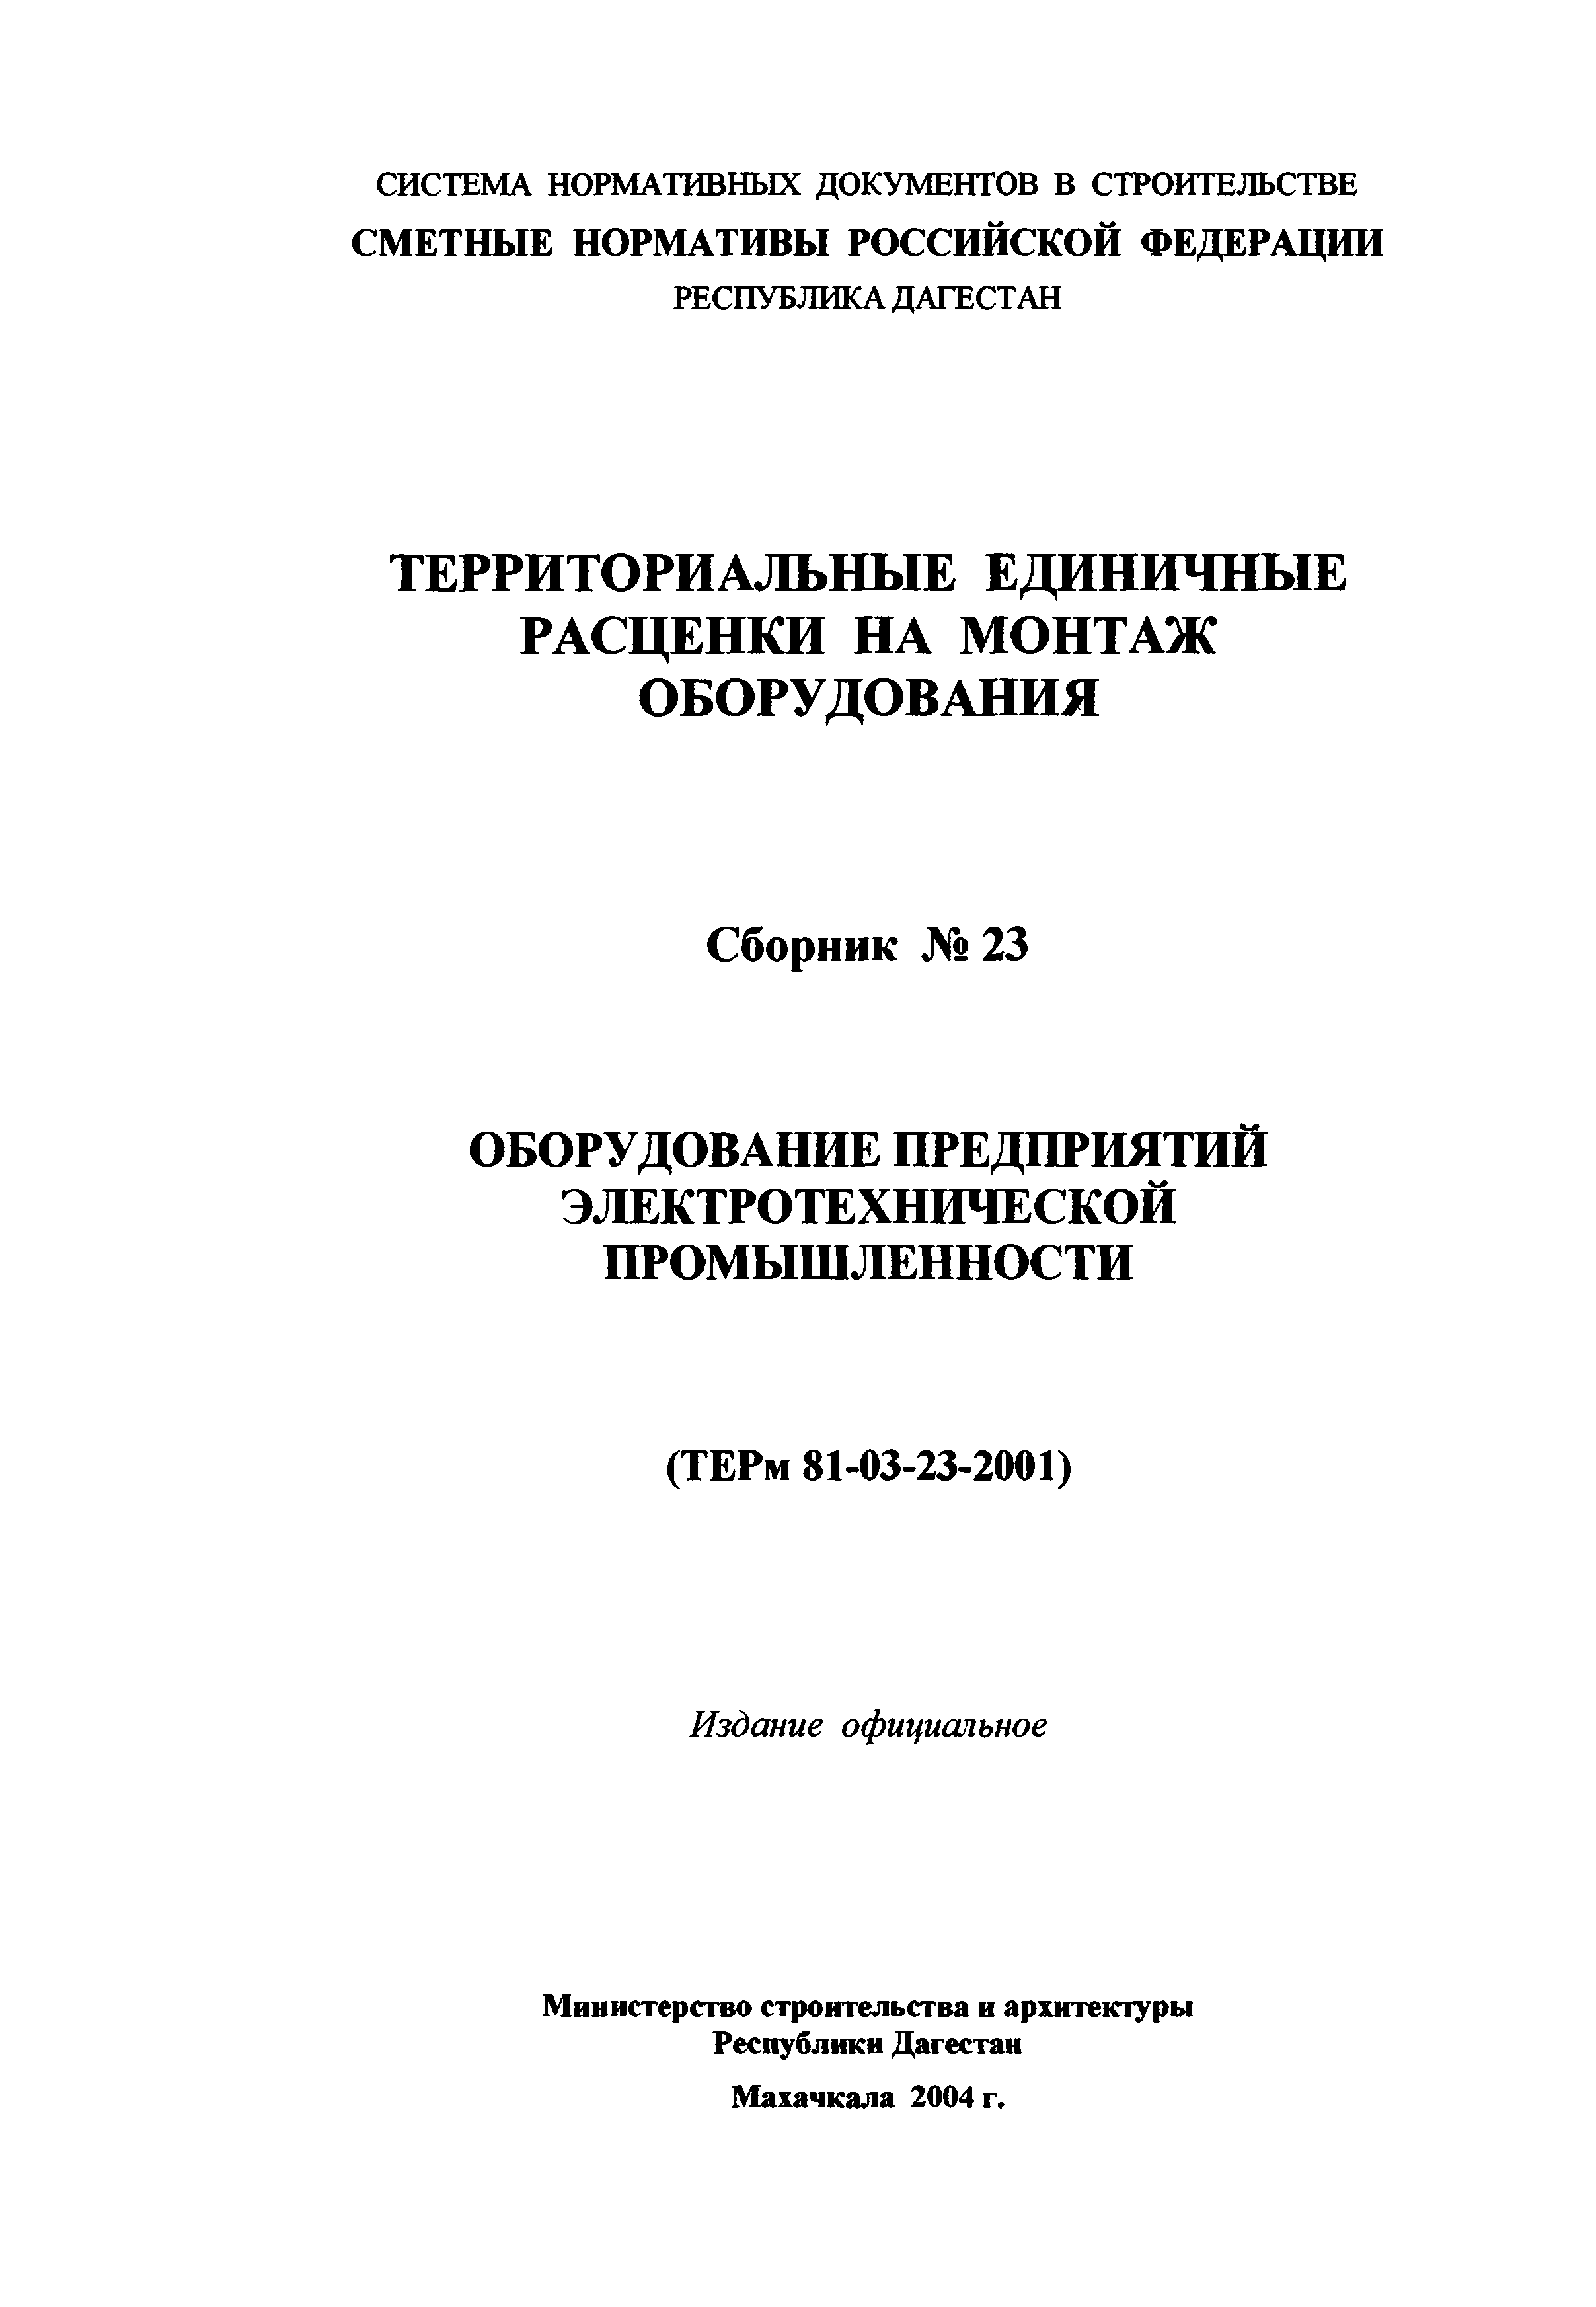 ТЕРм Республика Дагестан 2001-23